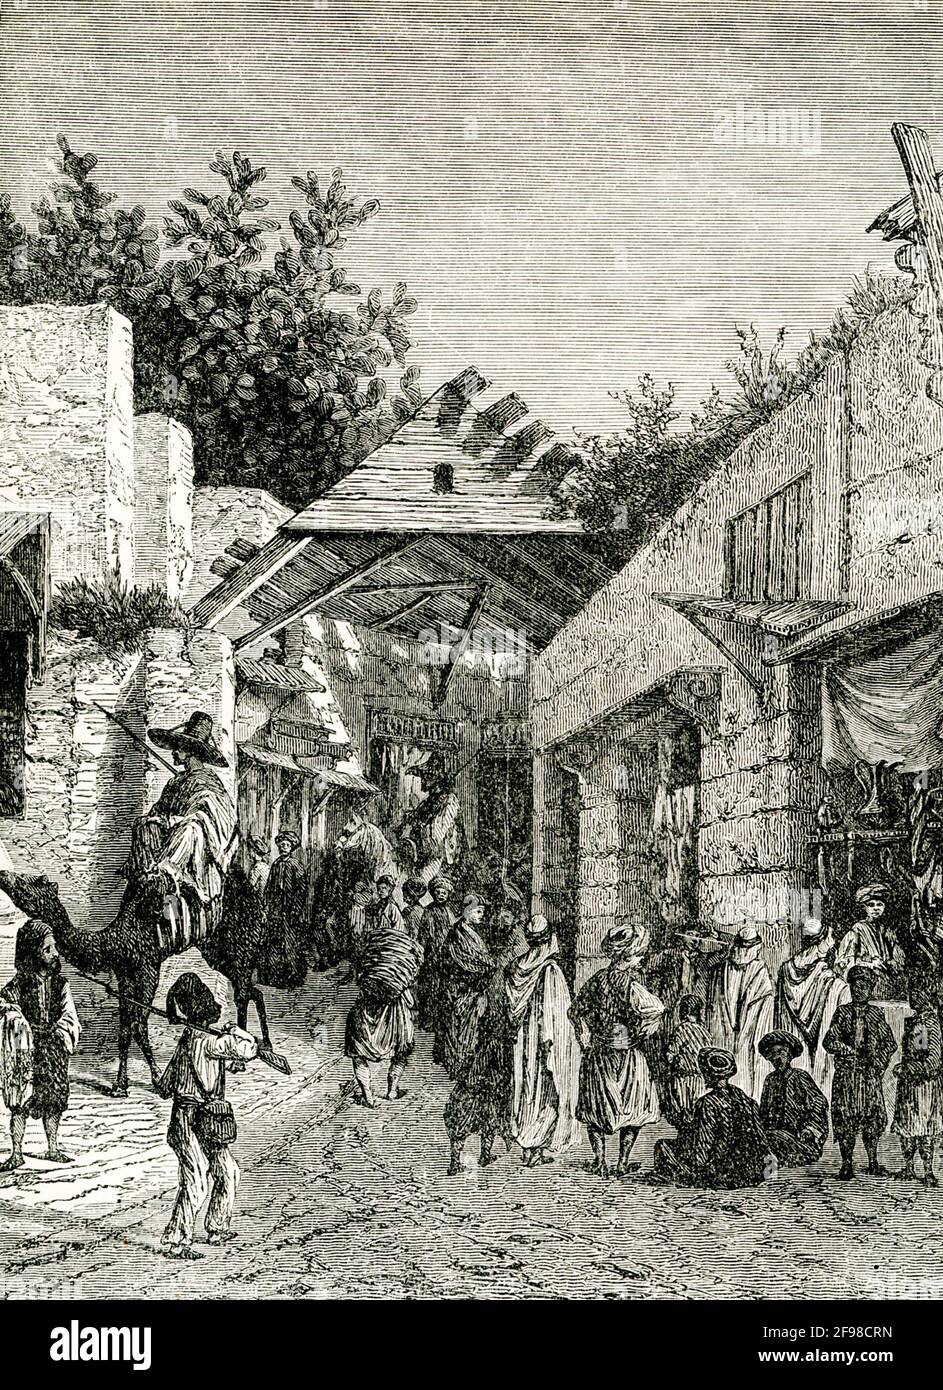 This 1880s illustration shows an Arabian Bazaar. Stock Photo